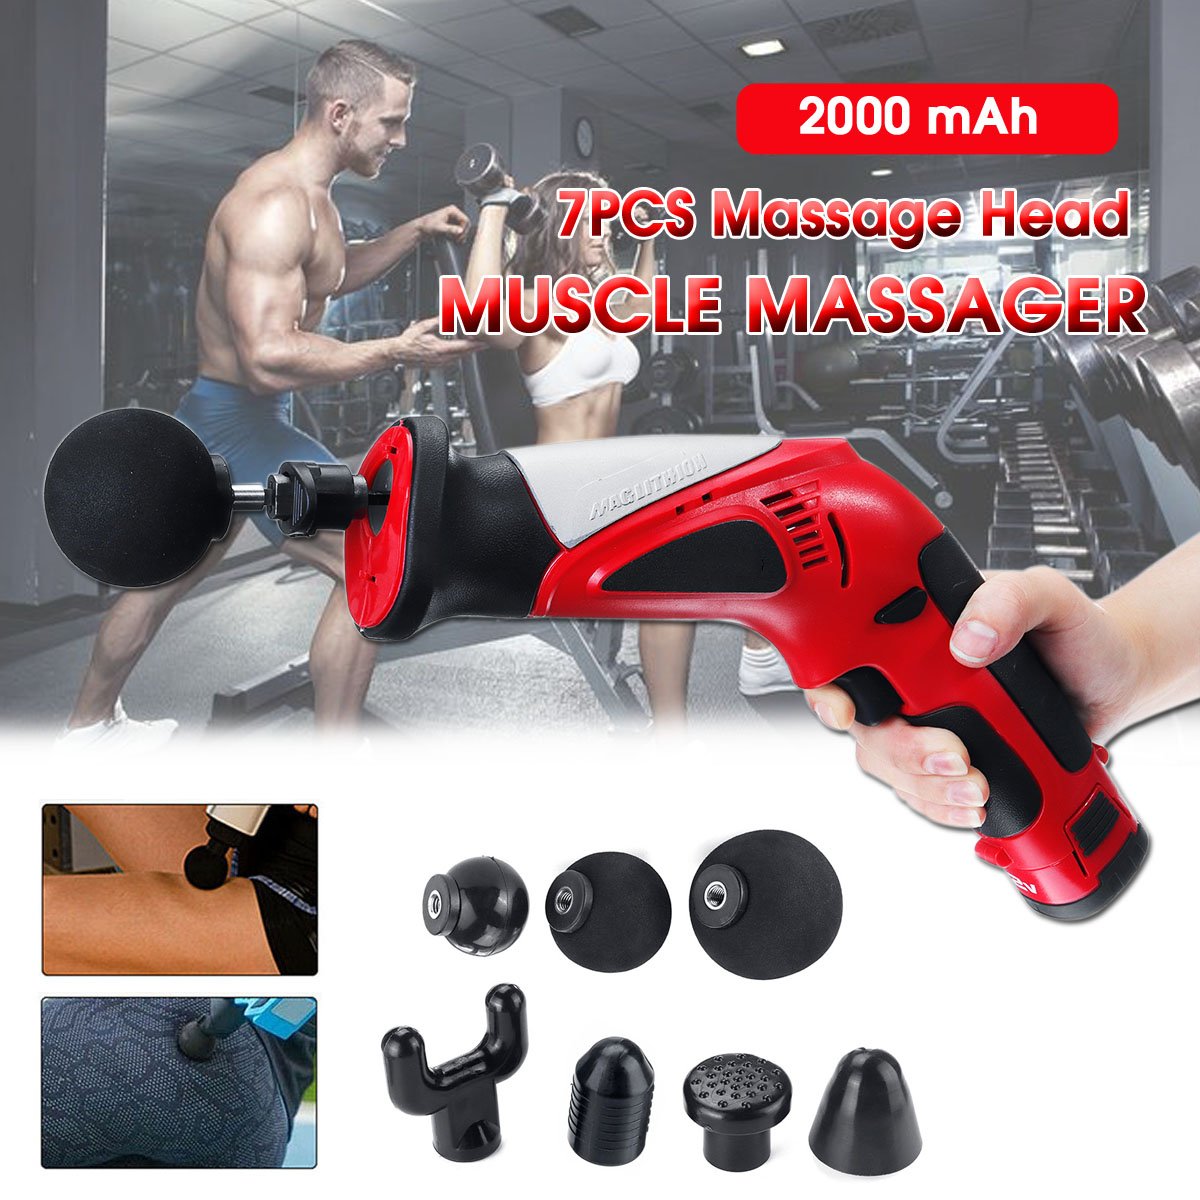 2000mAh-Vibration-Handheld-Muscle-Relaxation-Fascial-Muscle-Massager-Fascial-Relaxation-for-Fitness--1473480